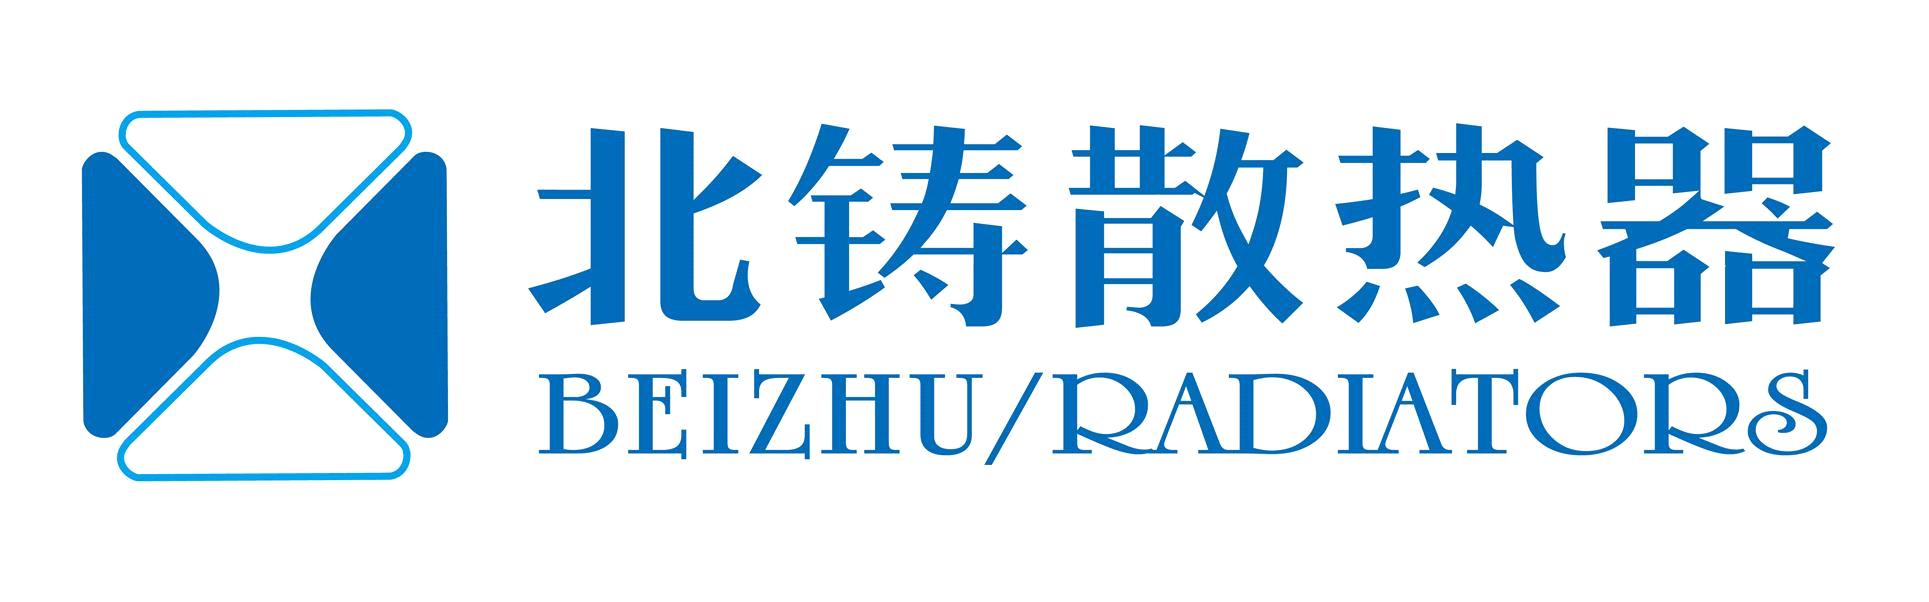 Beizhu Radiator Co., Ltd.